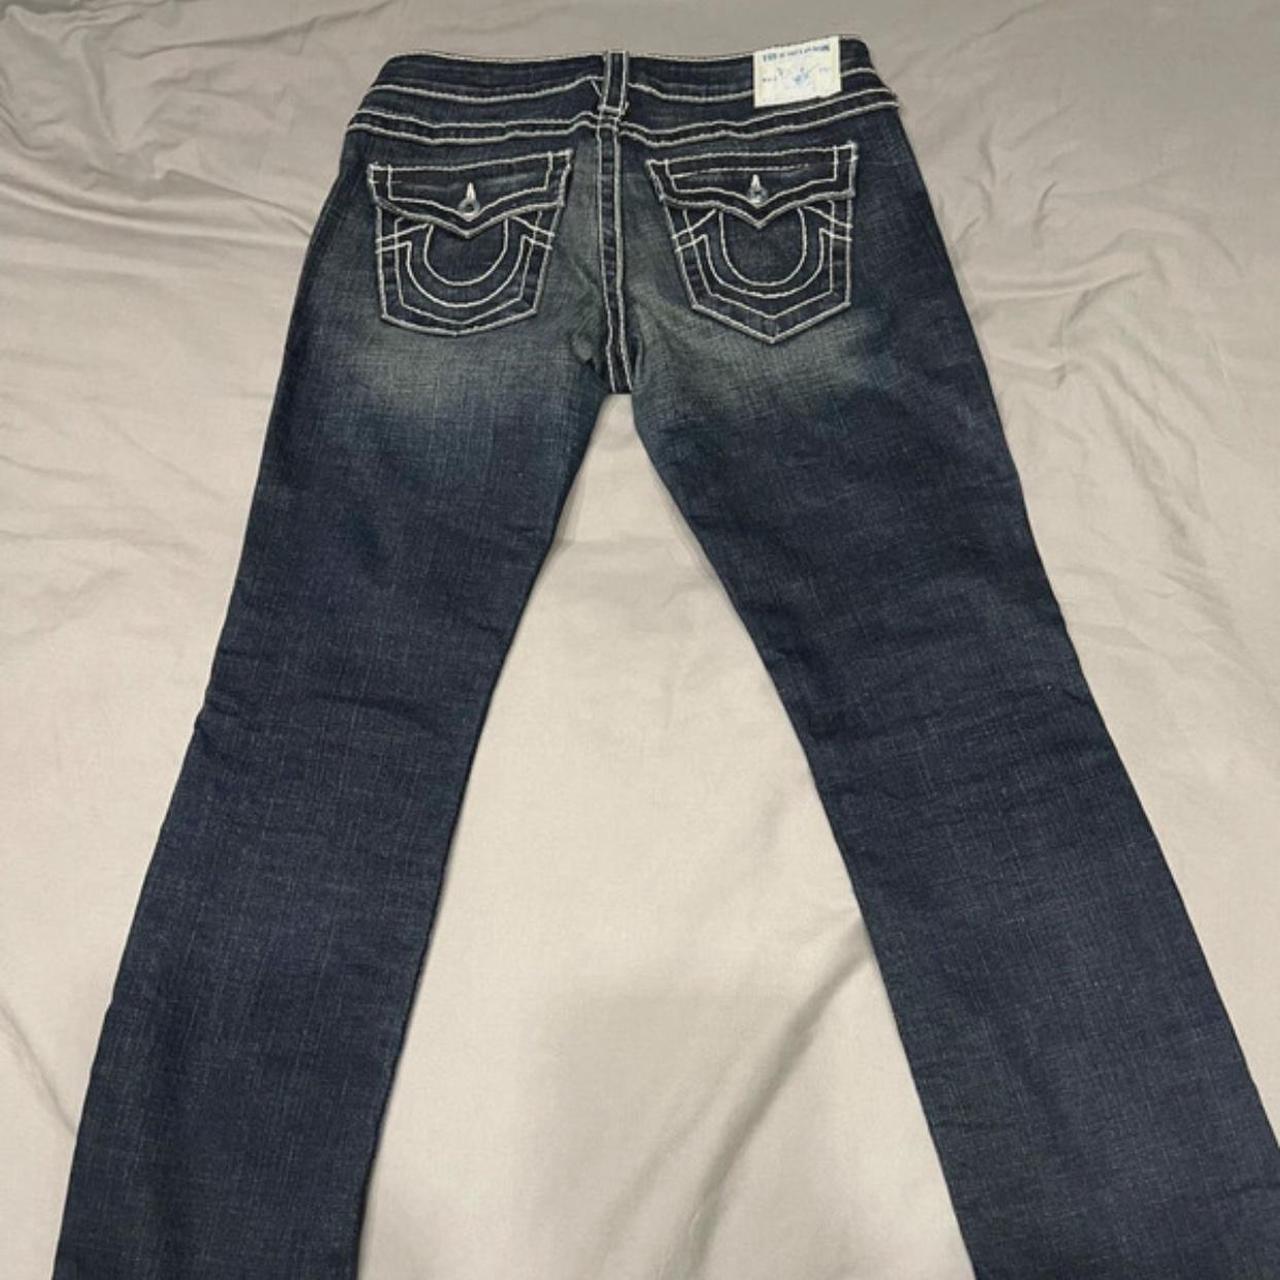 True religion jeans boot cut contrast stitch low... - Depop